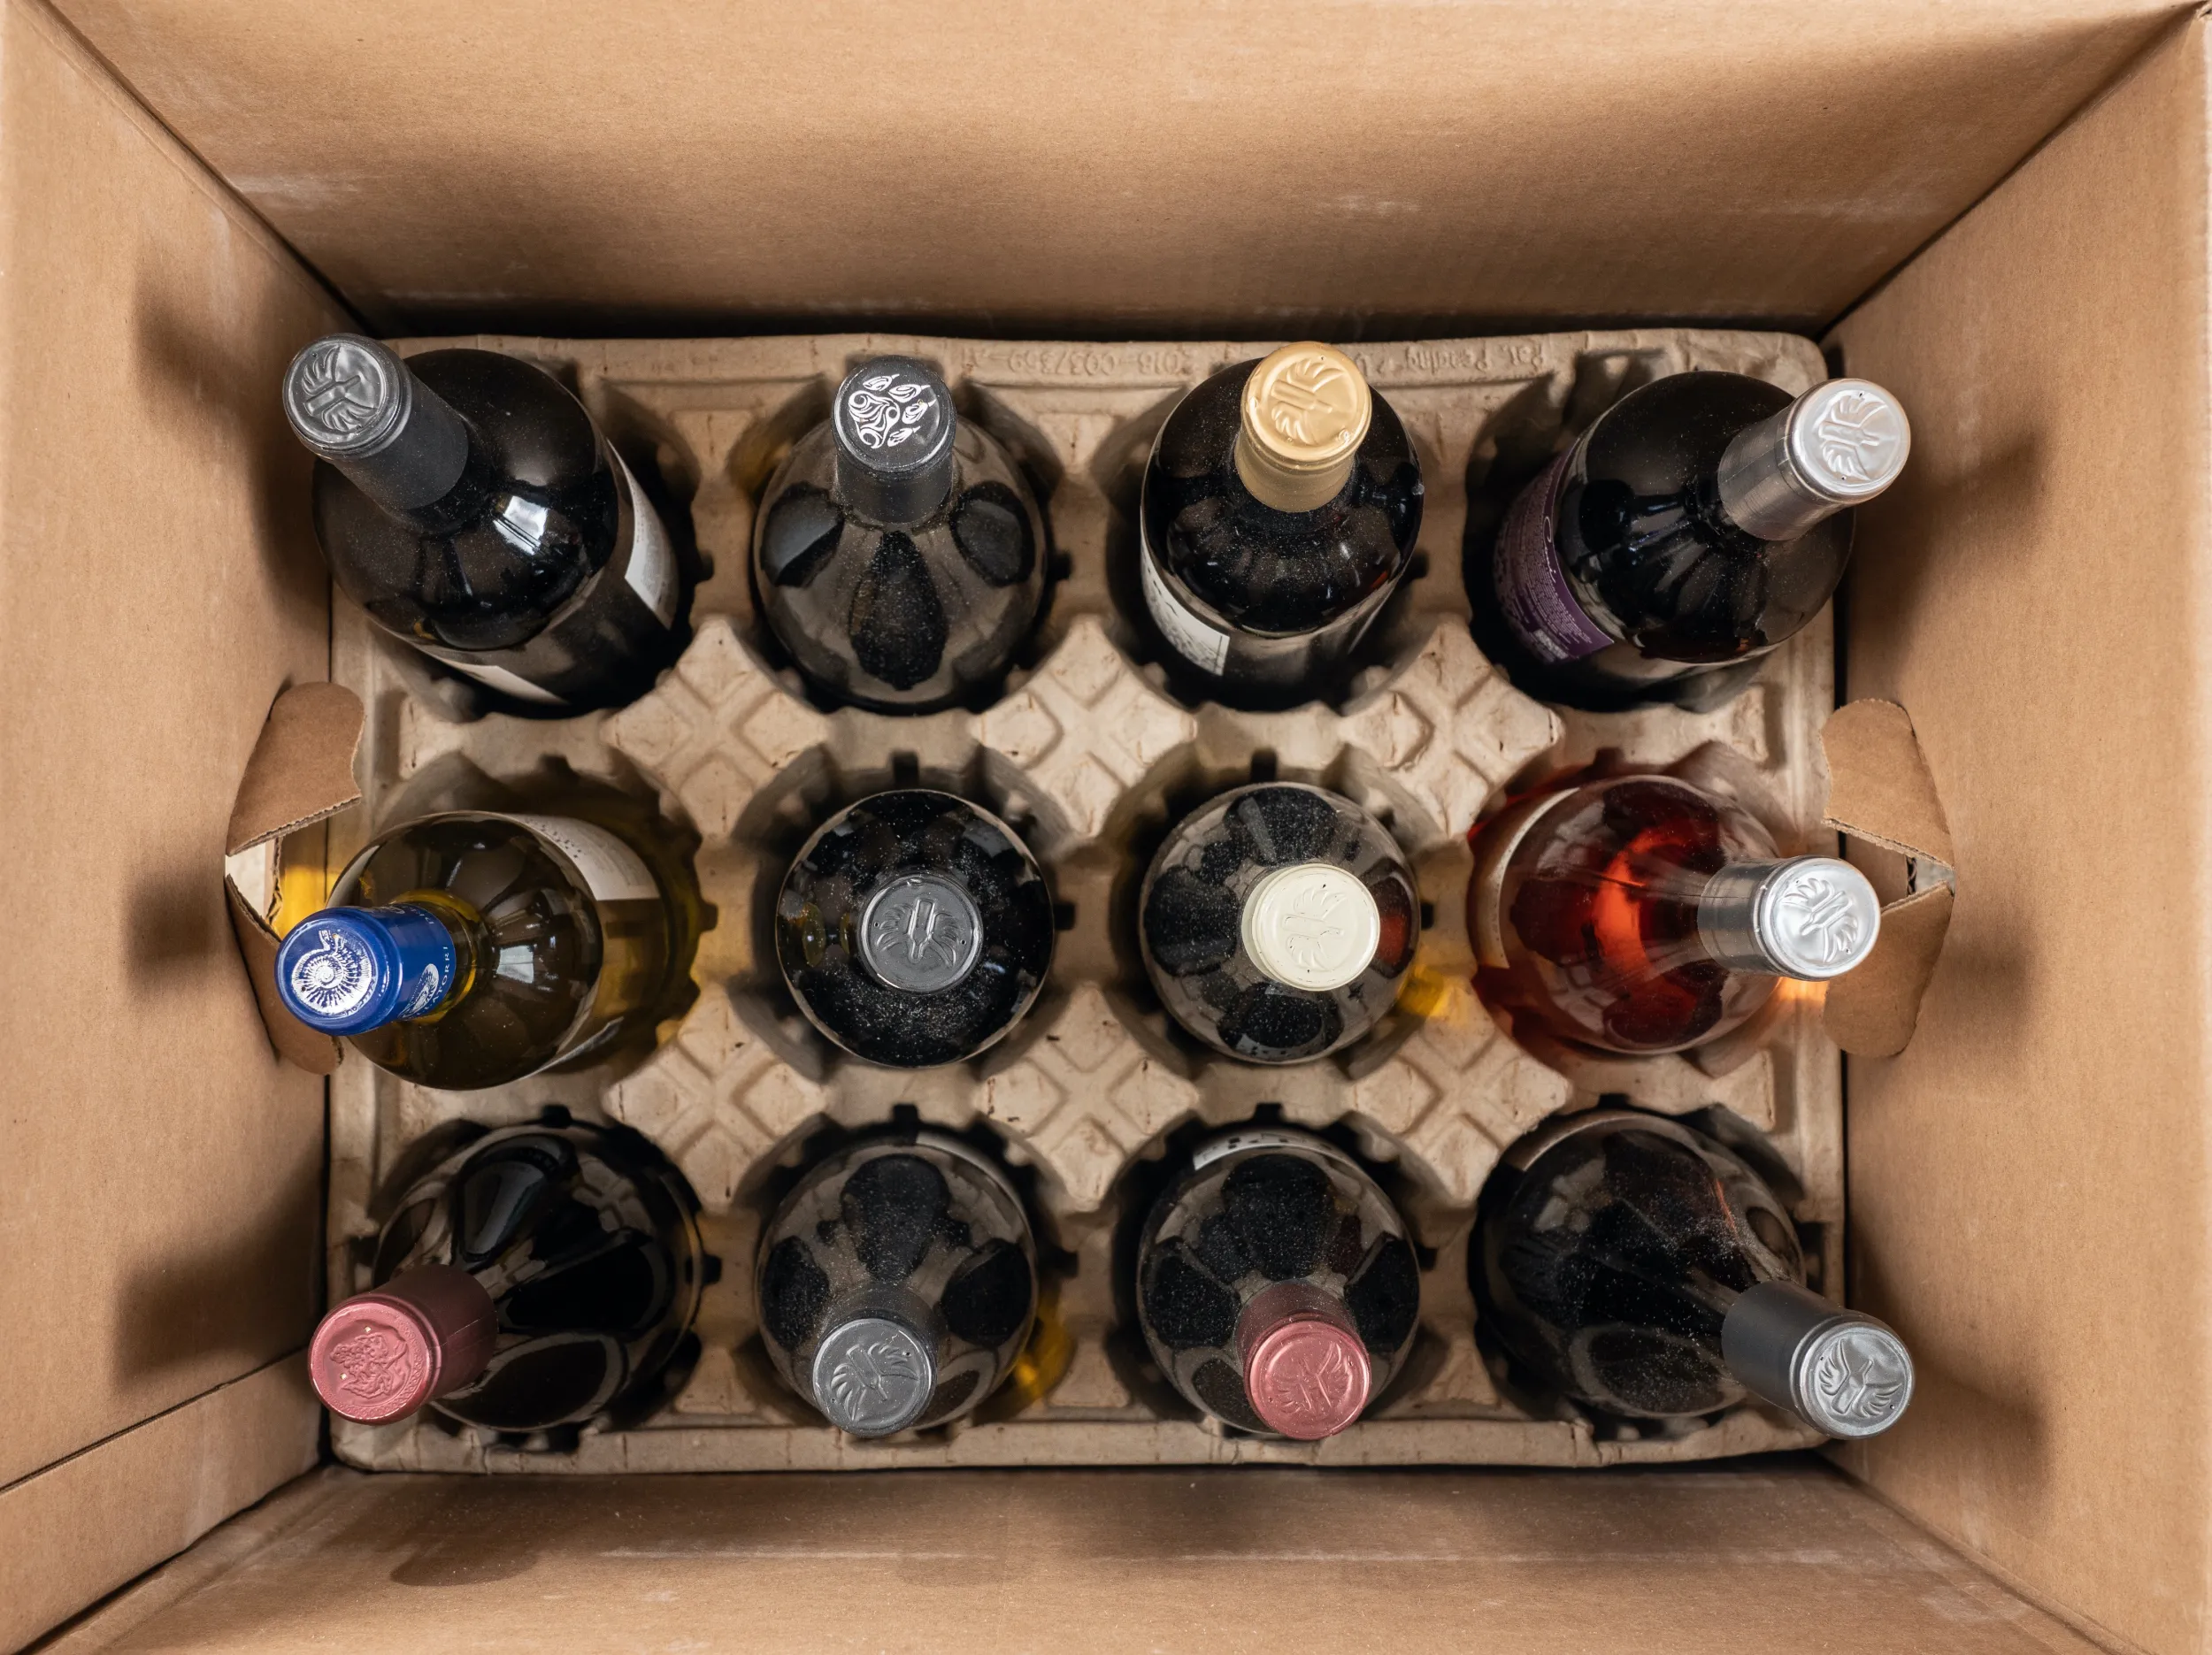 Wine Shipping